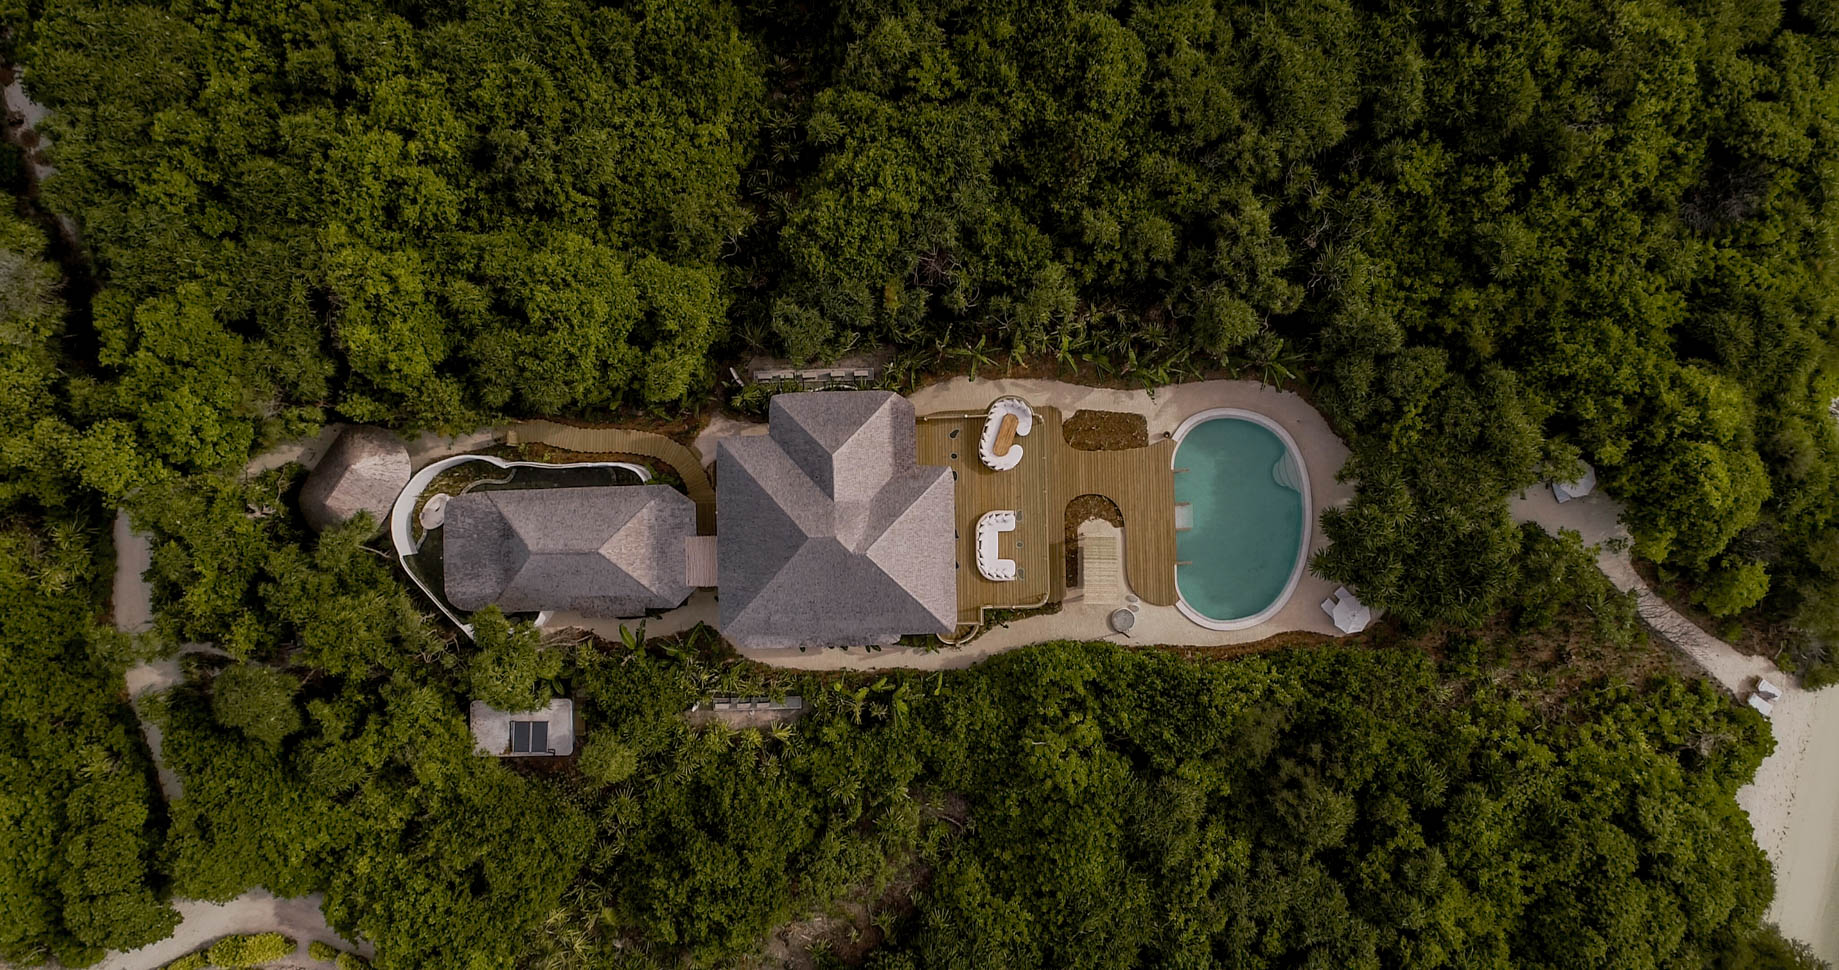 Soneva Jani Resort - Noonu Atoll, Medhufaru, Maldives - 2 Bedroom Crusoe Residence Island Villa Aerial